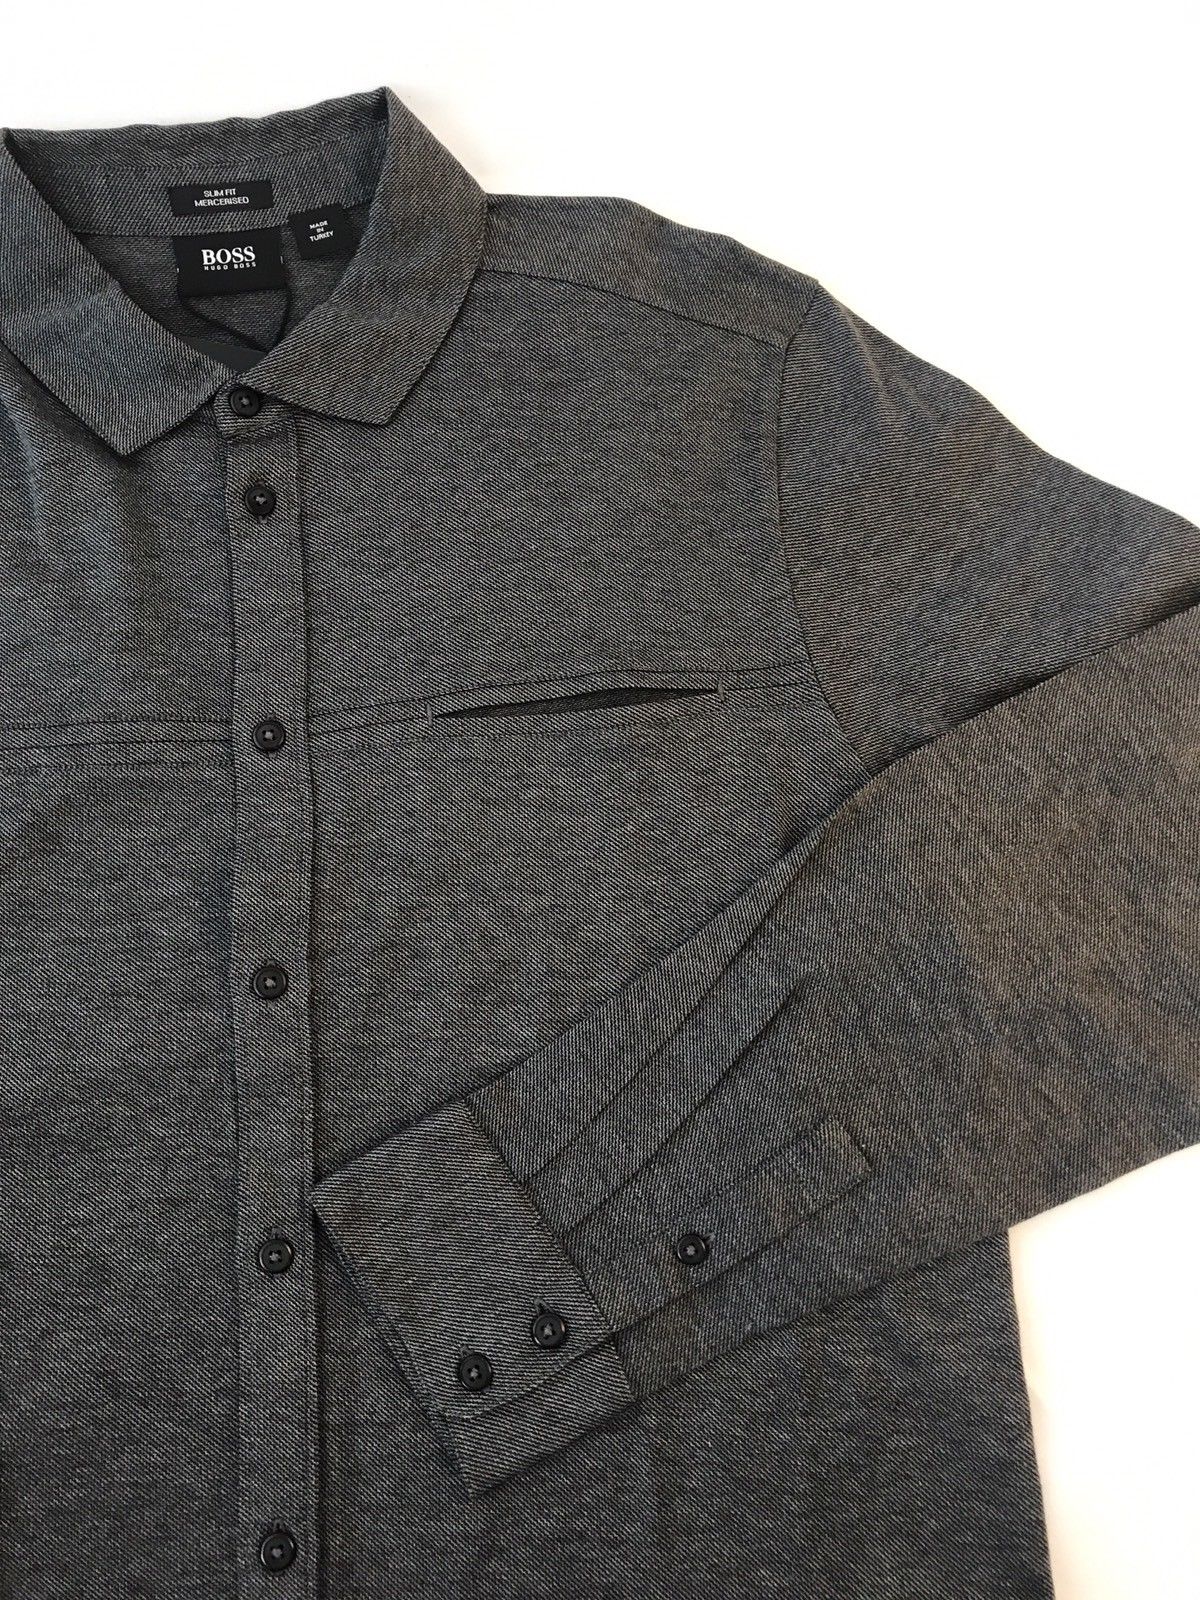 NWT $195 BOSS Hugo Boss 'Onara-01' Black Label Long Sleeve Slim Fit Gray Shirt L - BAYSUPERSTORE